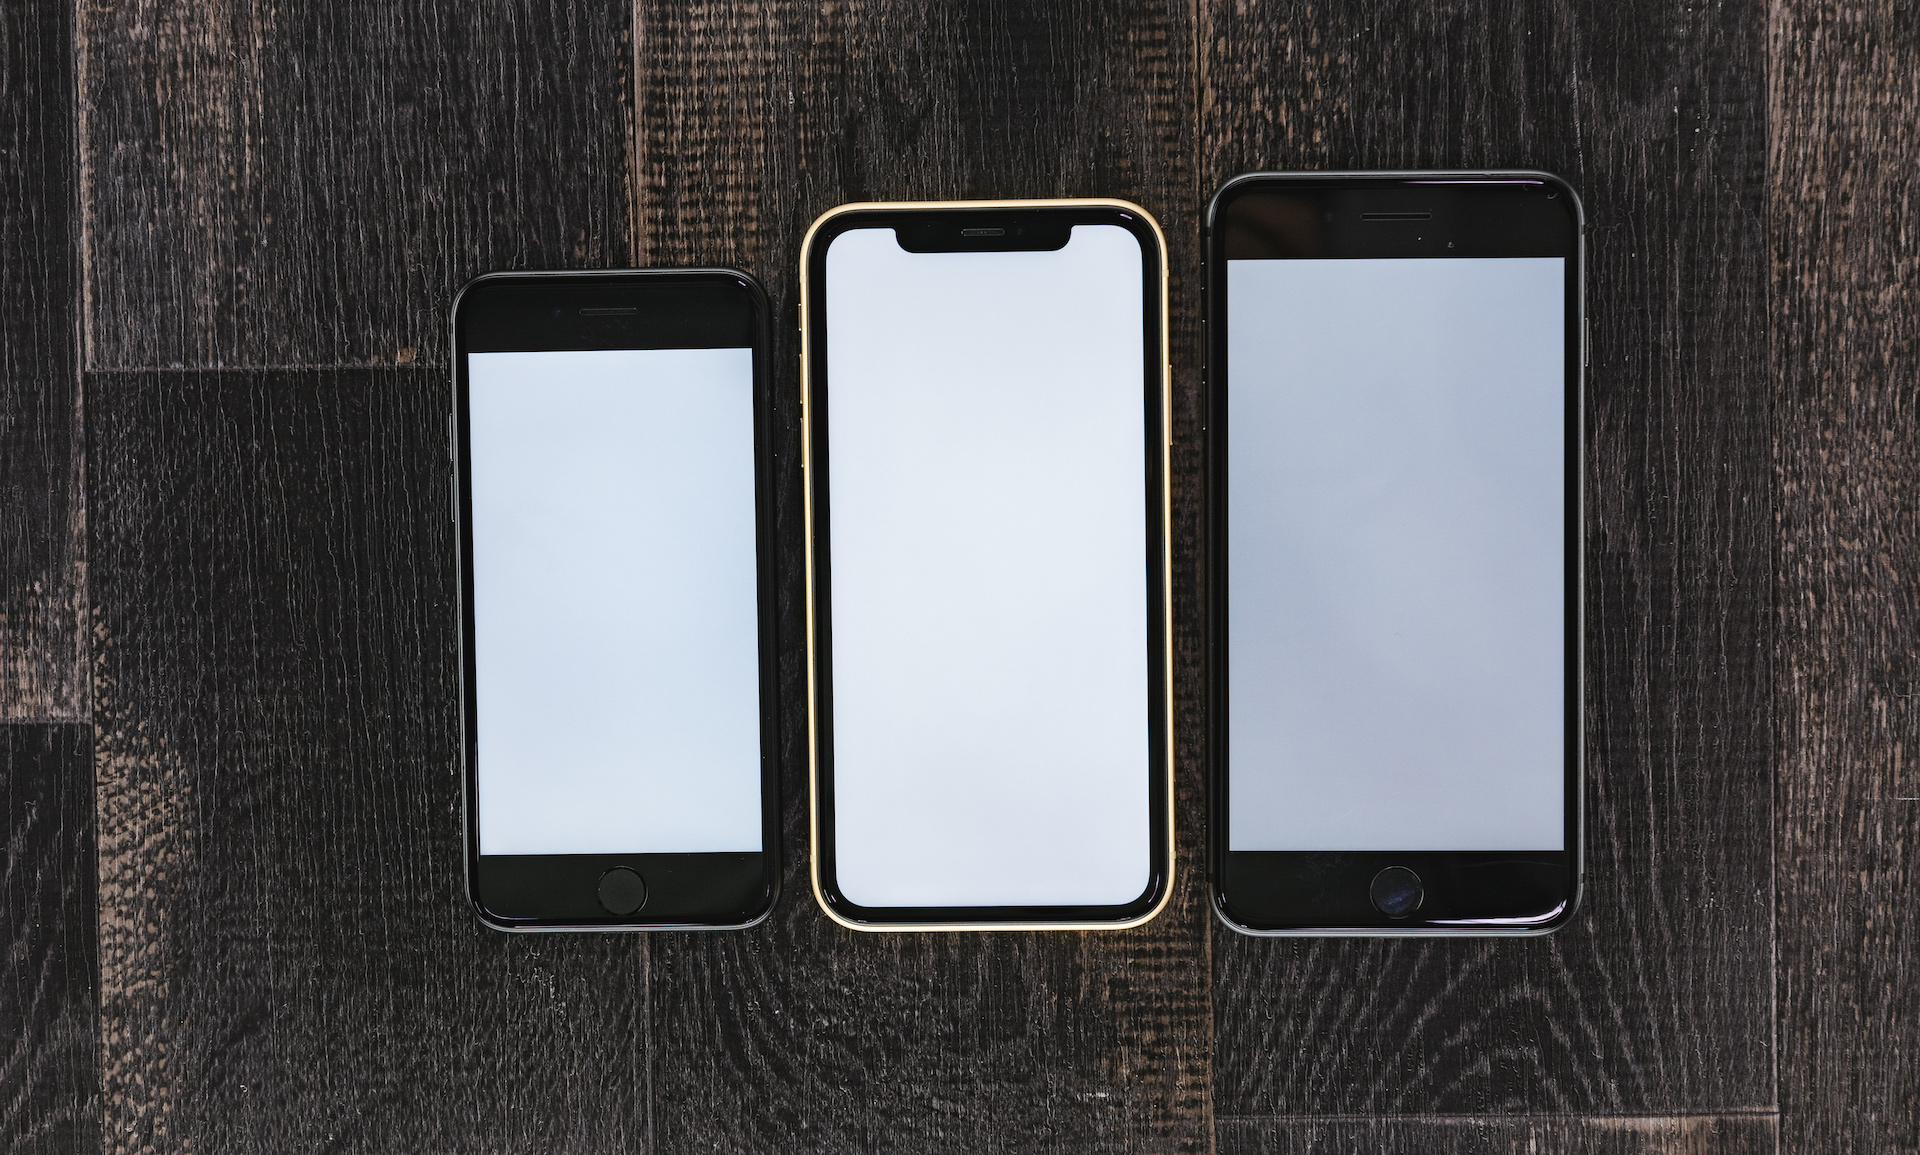 Iphone 11とiphone 7の違いは 機種変更前に知りたい機能を比較